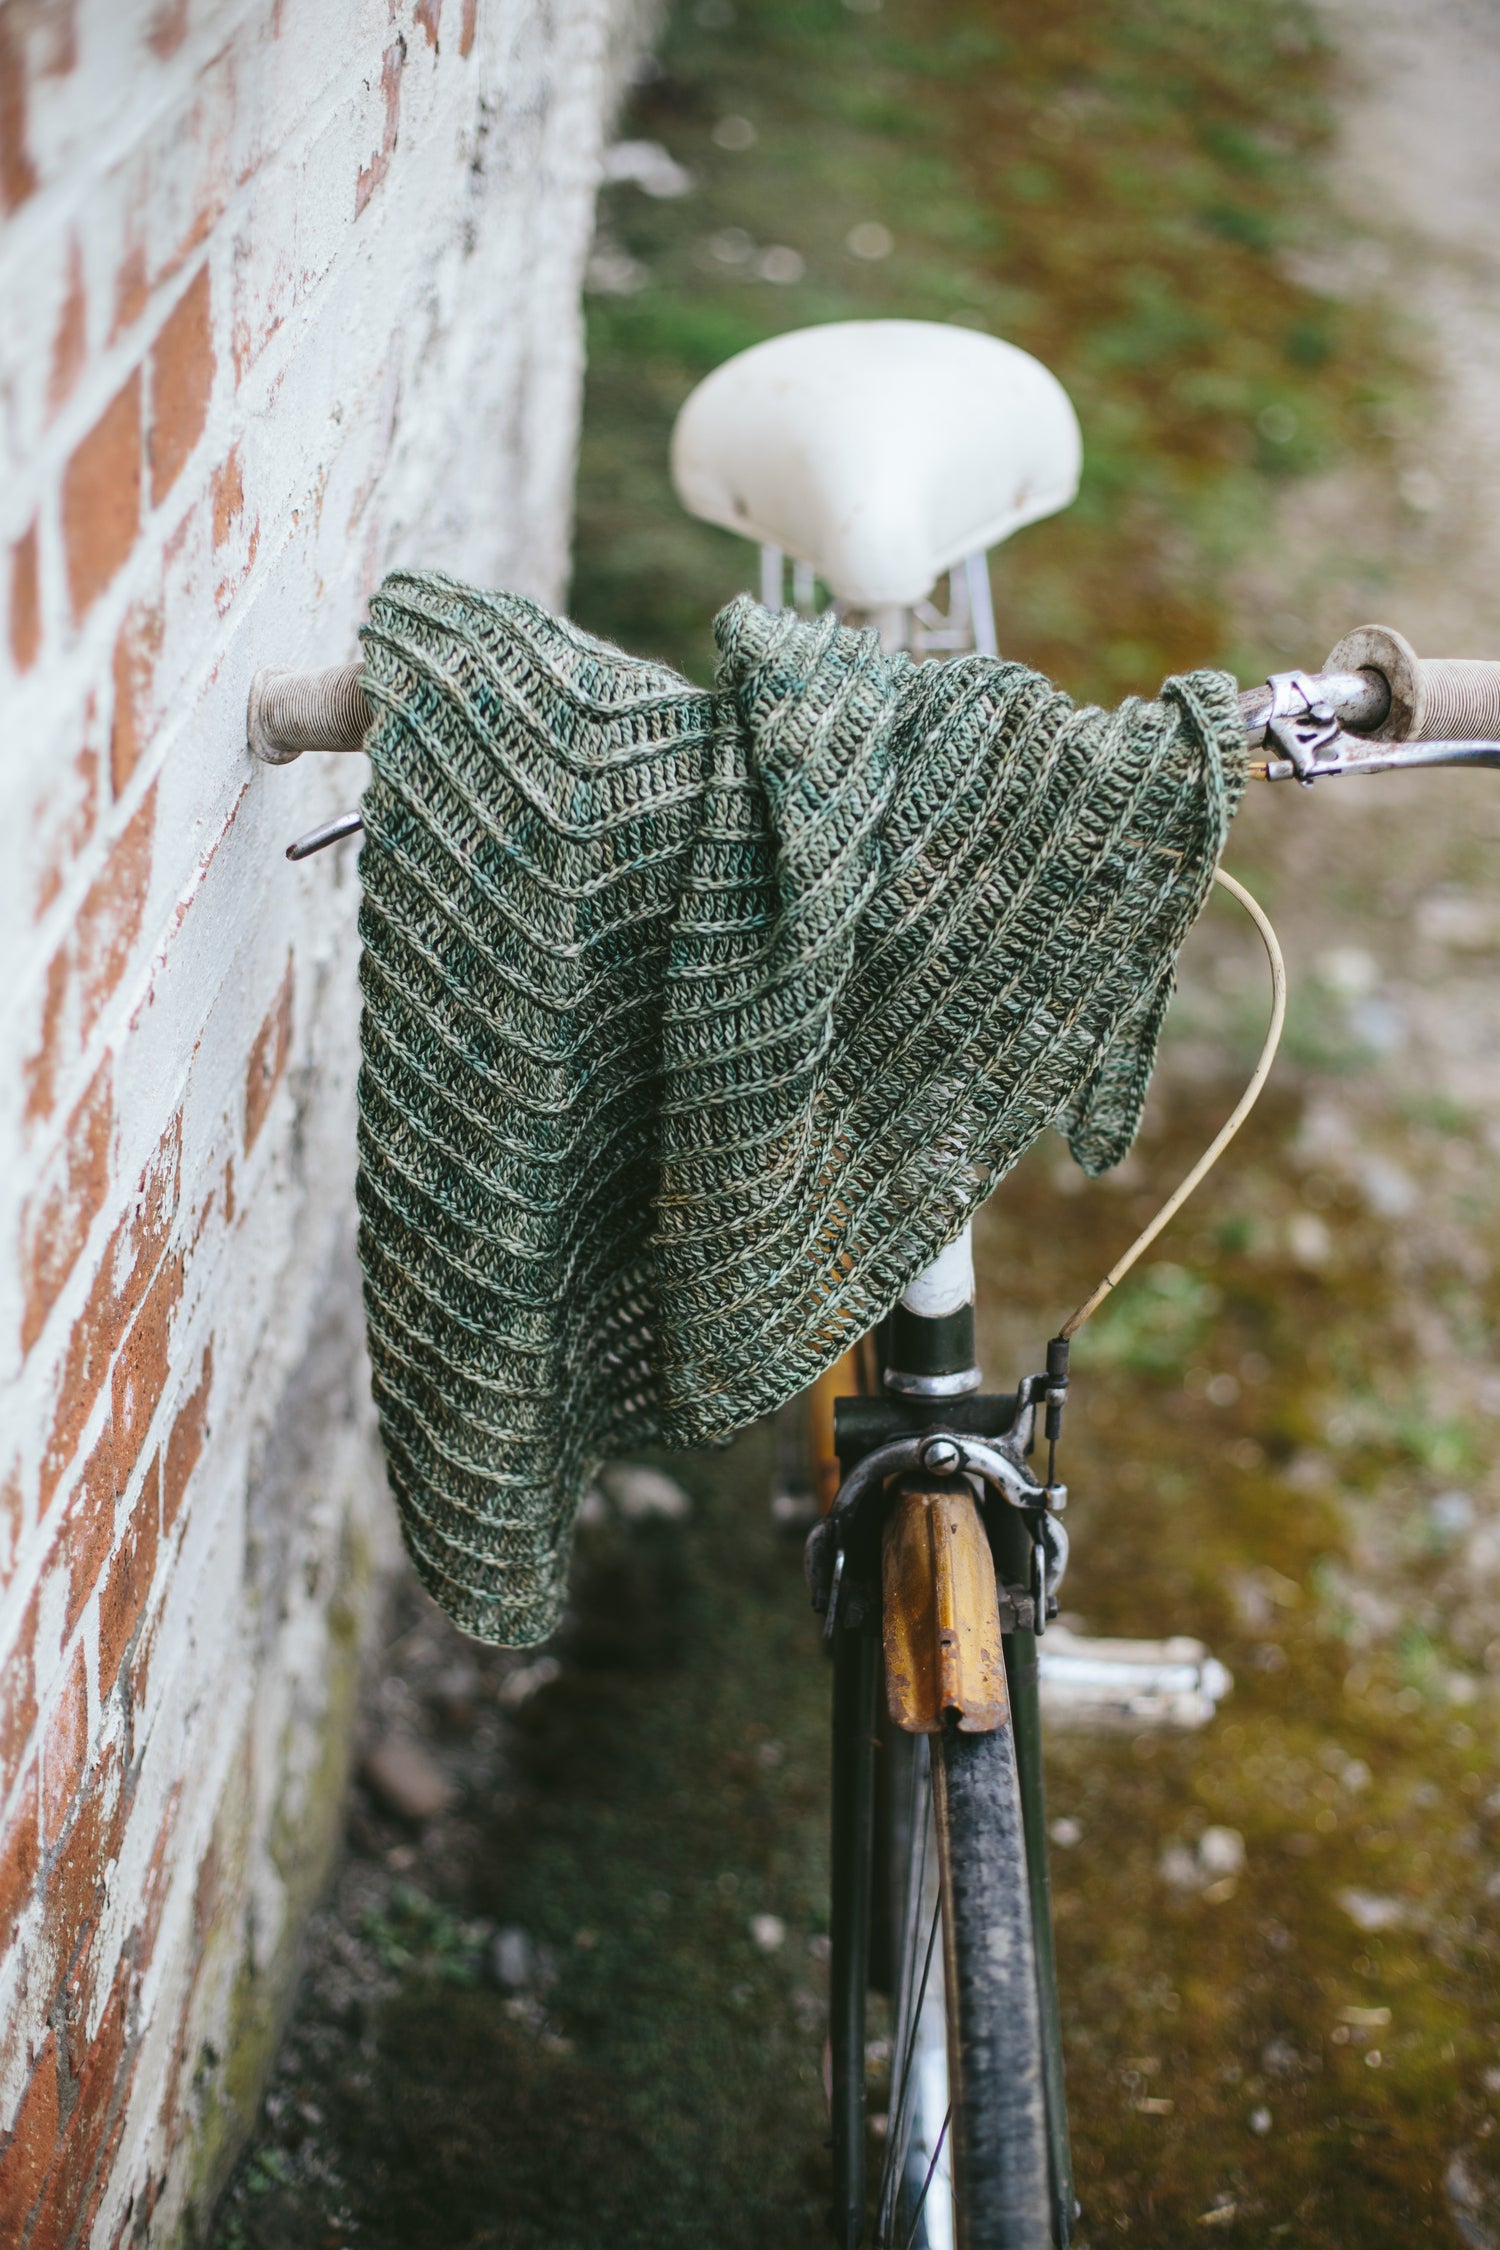 raised crochet stitches shown on contour shawl